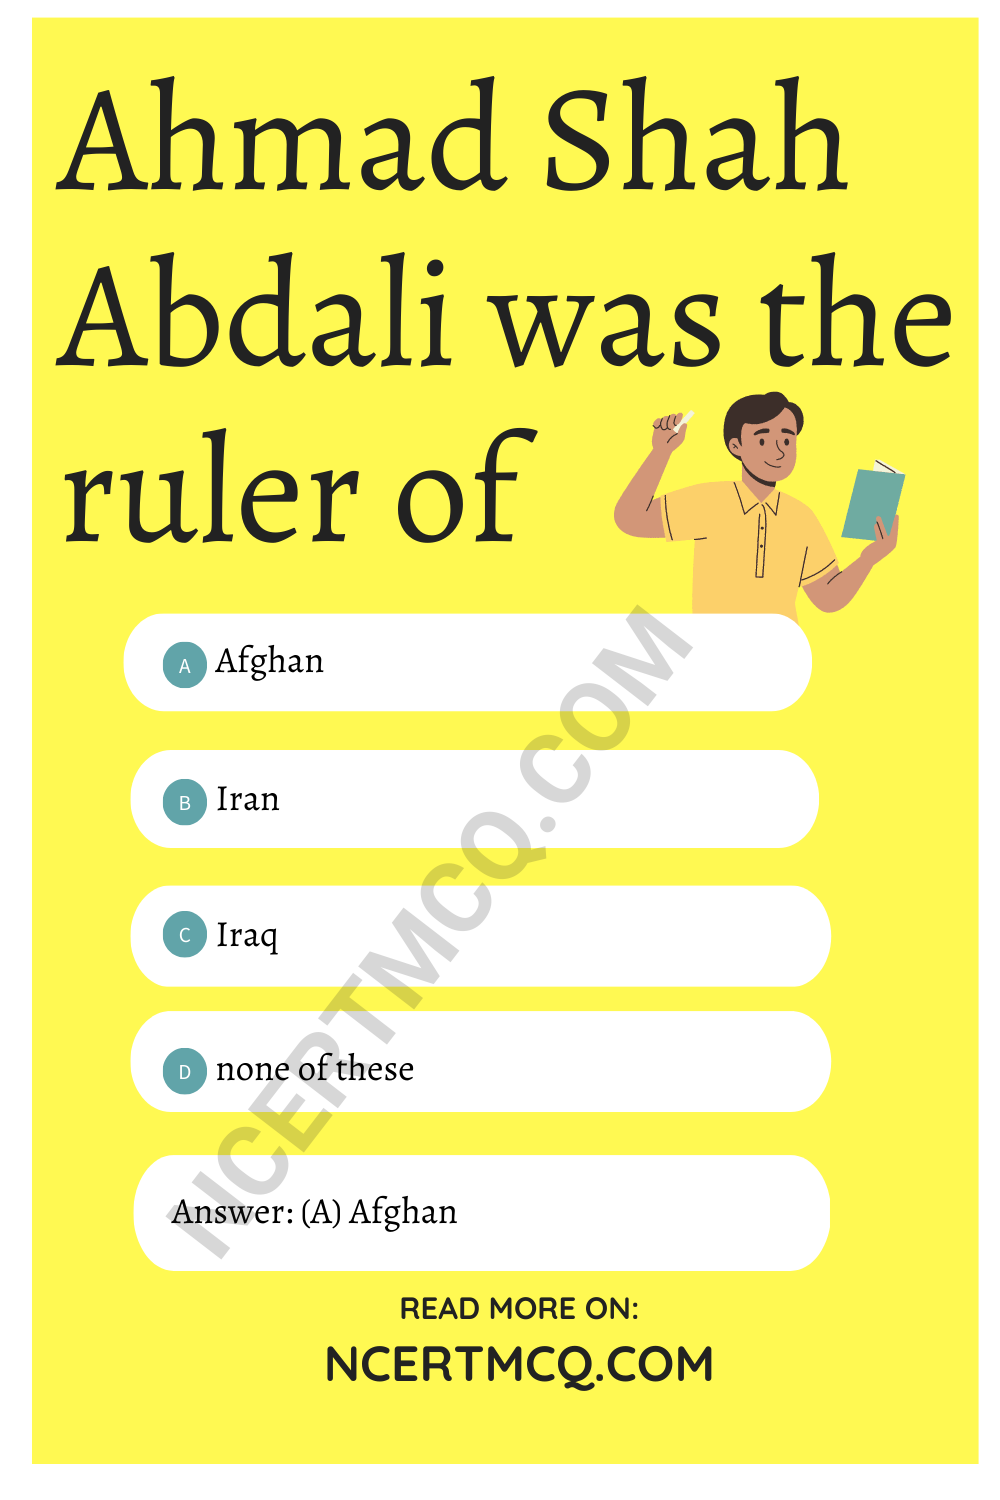 Ahmad Shah Abdali was the ruler of